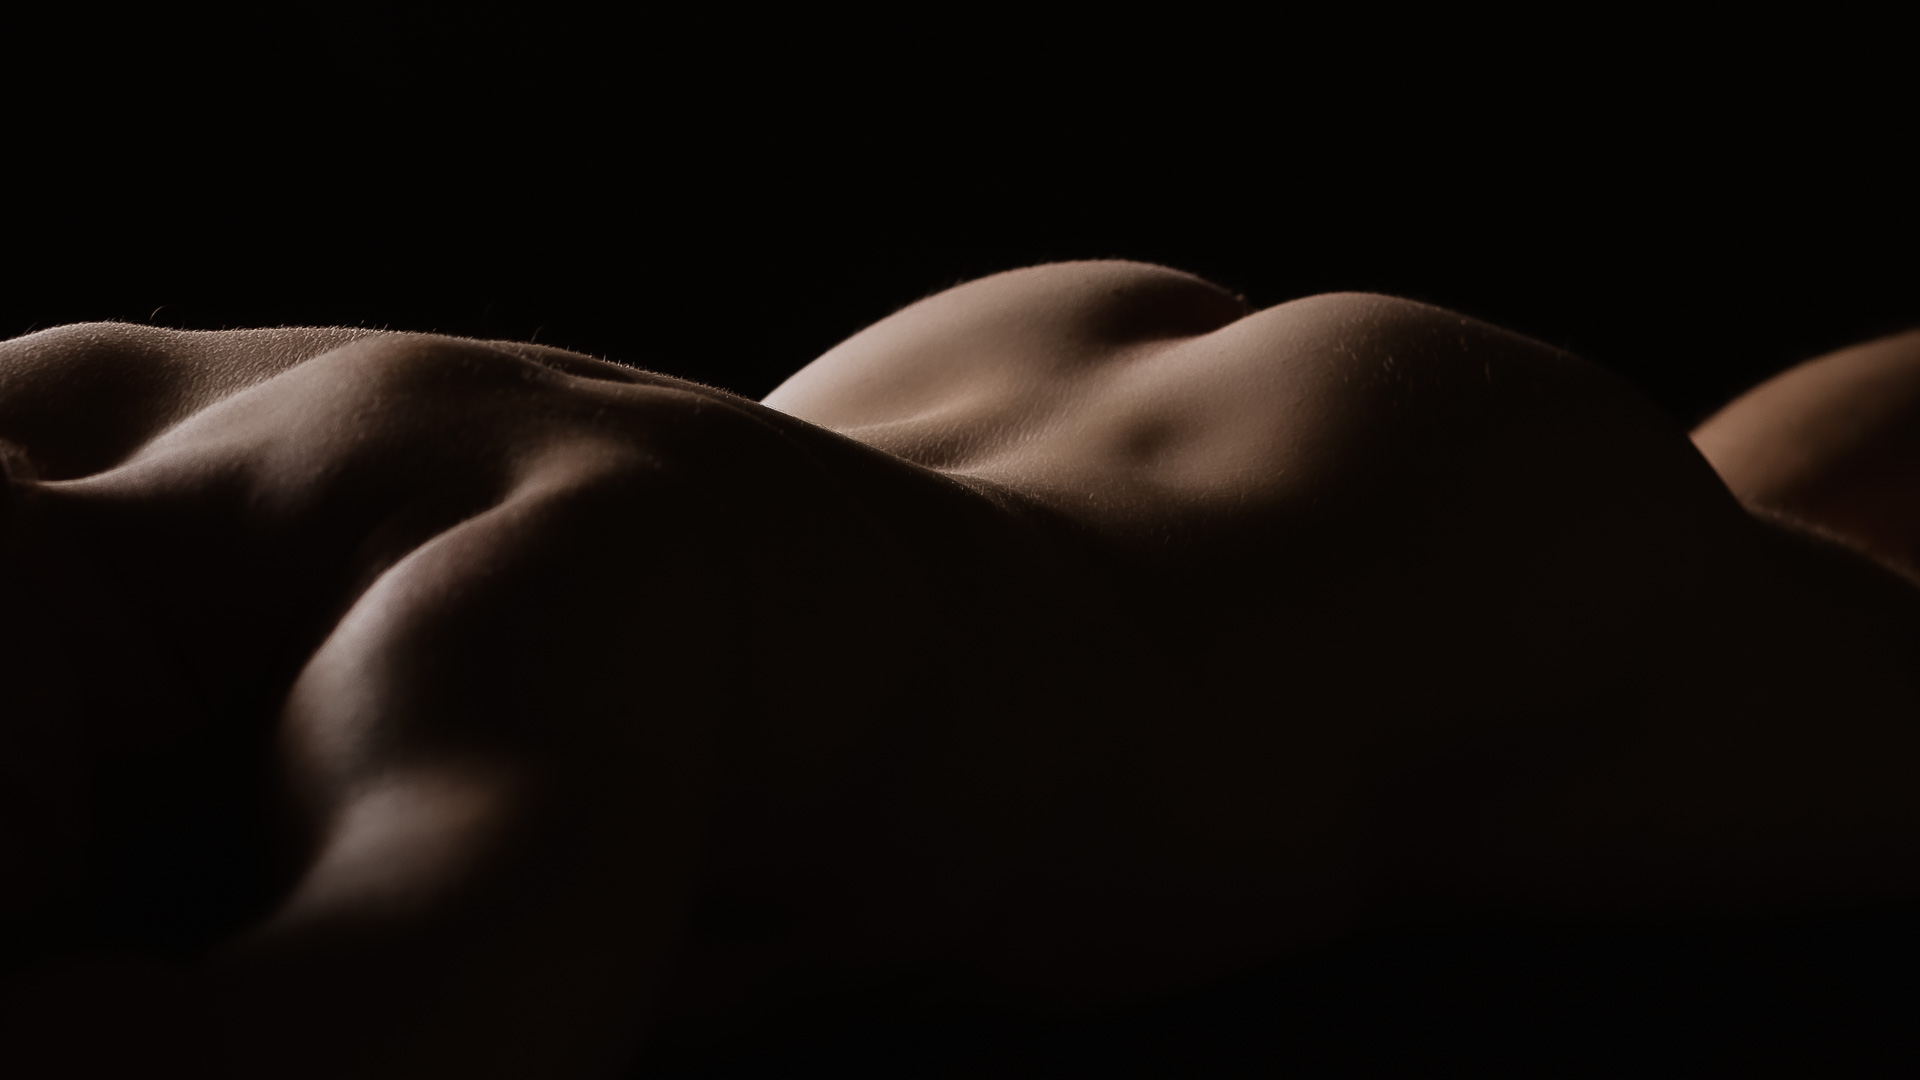 Körperlandschaften, nackter Männerpo und Rücken